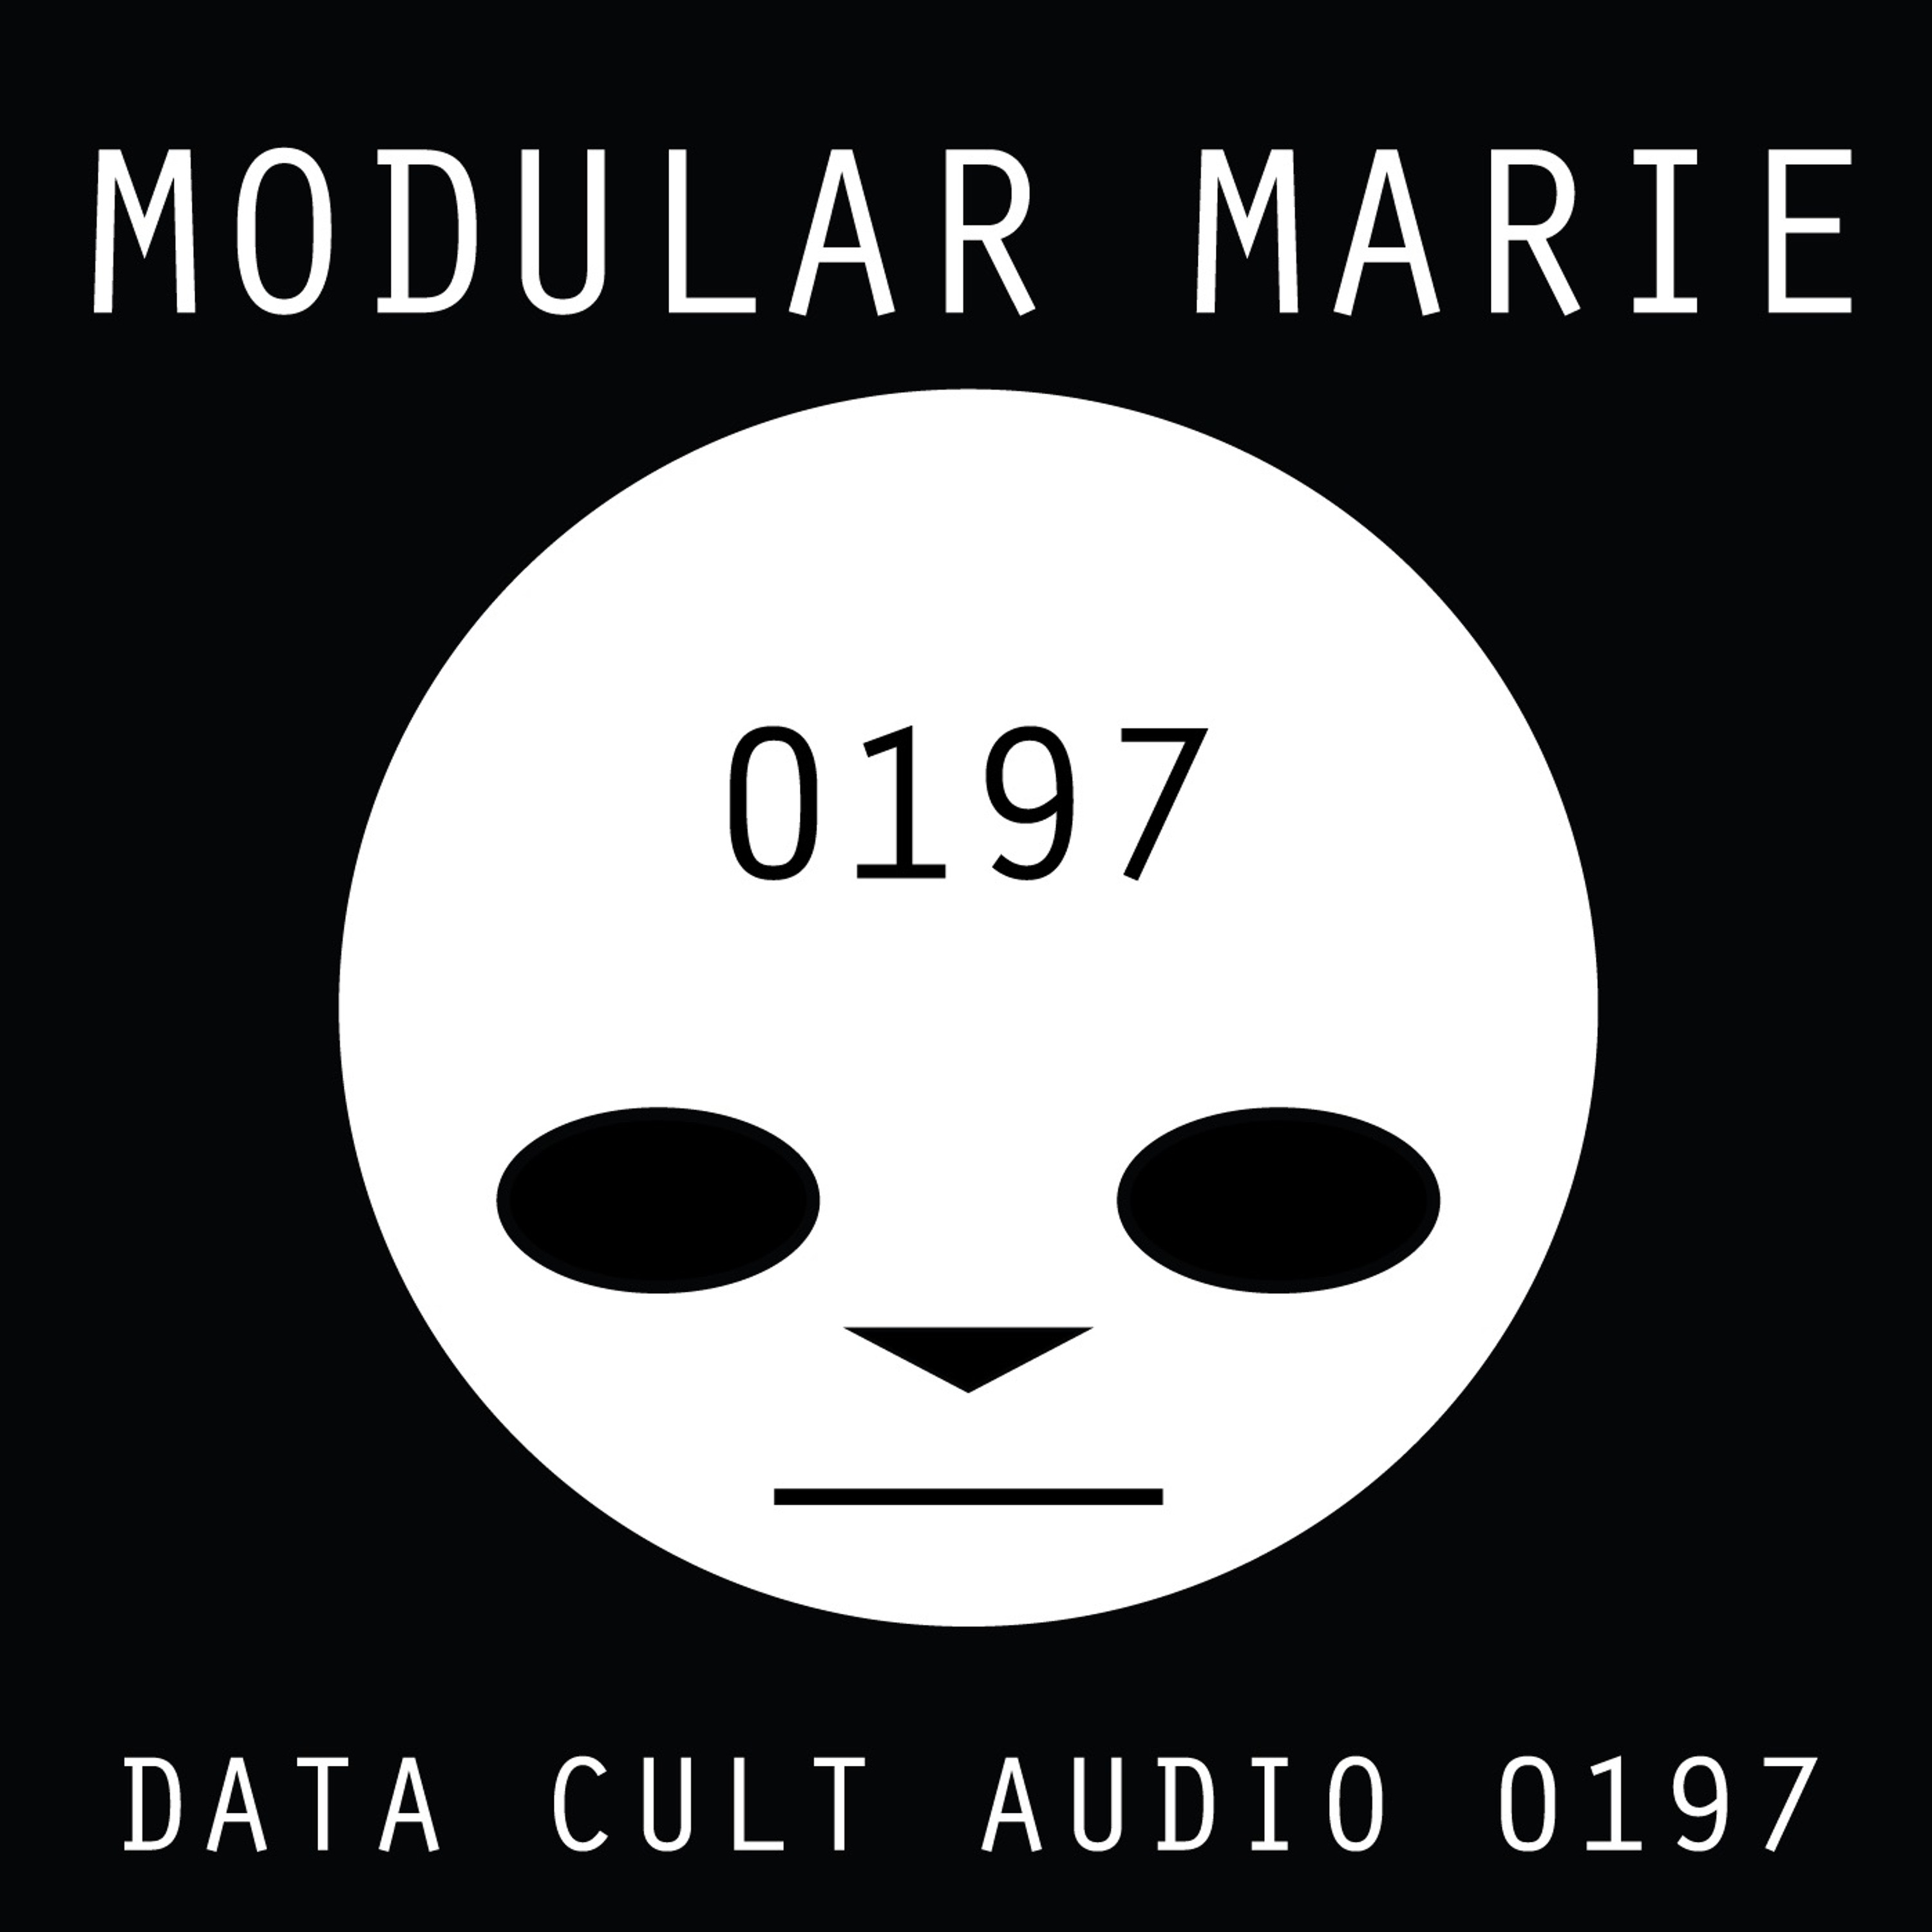 Data Cult Audio 0197 - Modular Marie